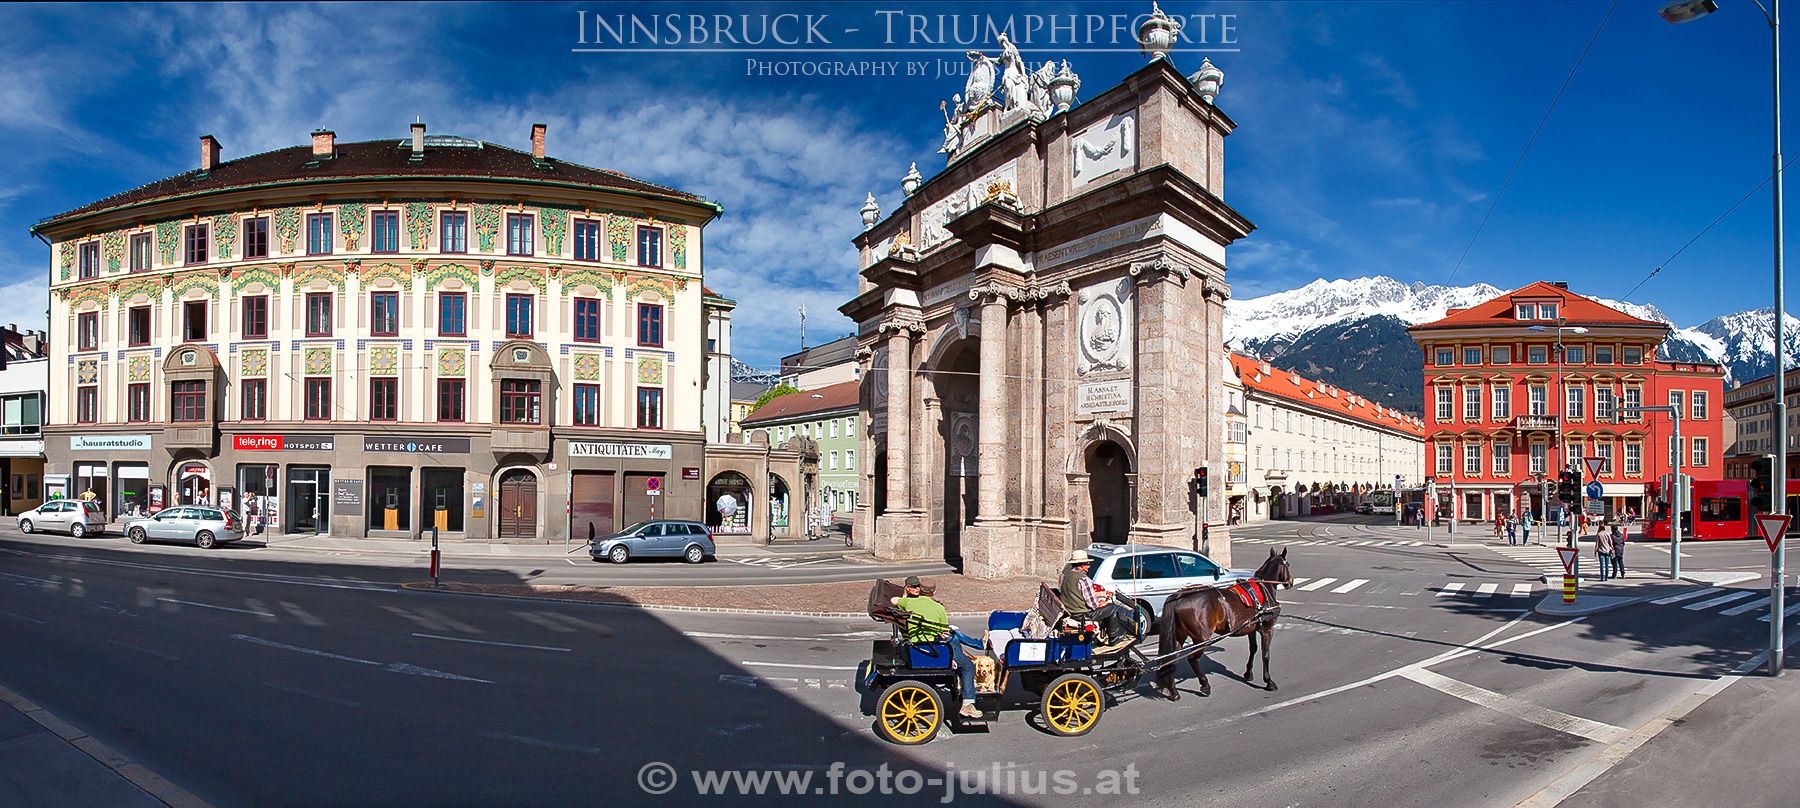 Innsbruck_027a_Triumphpforte.jpg, 841kB